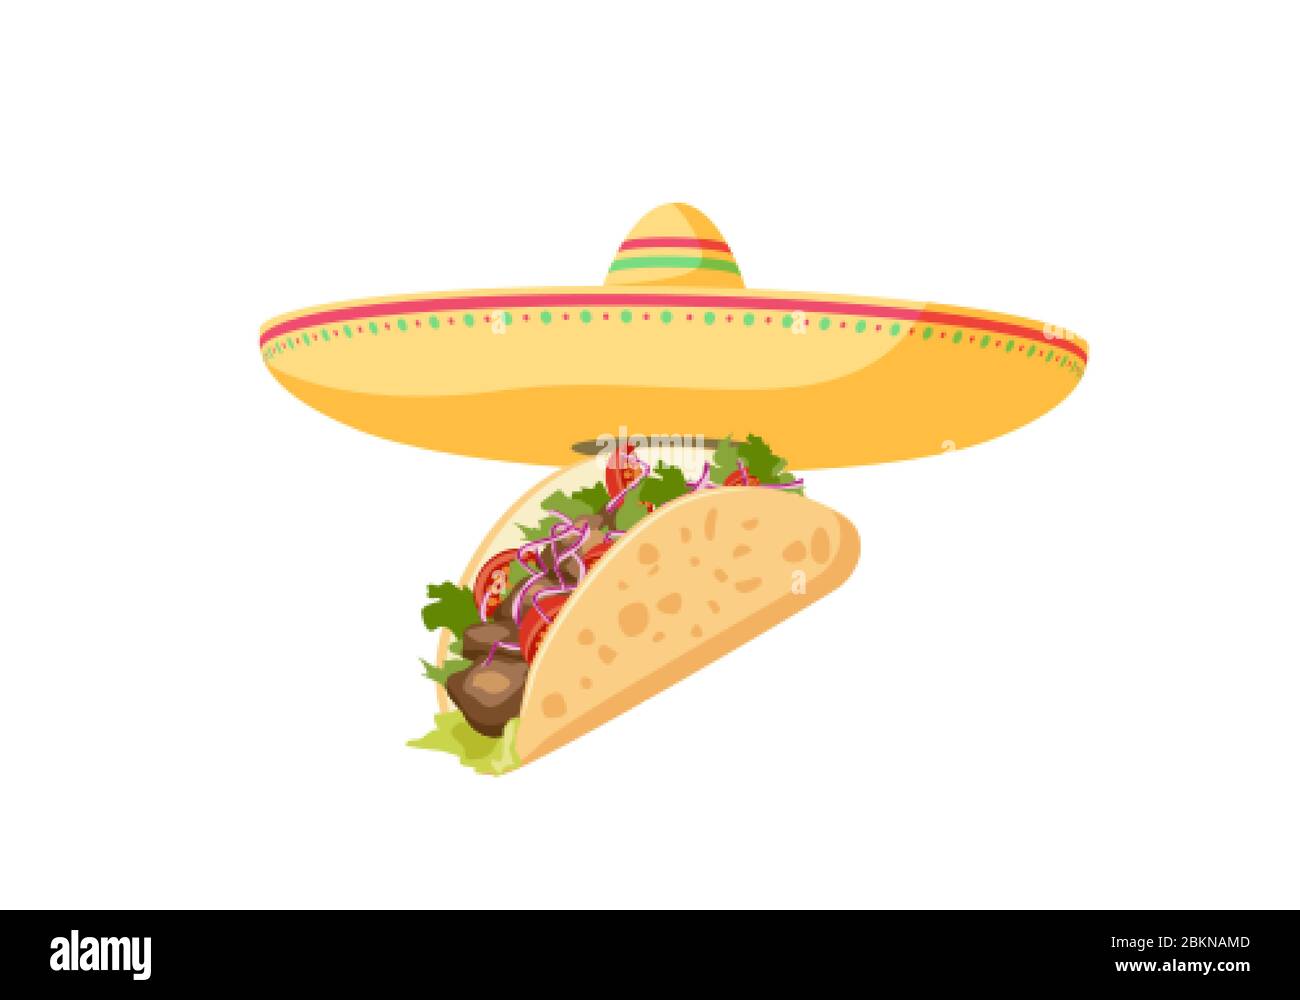 Vectores de comida mexicana vectores fotografías e imágenes de alta  resolución - Alamy